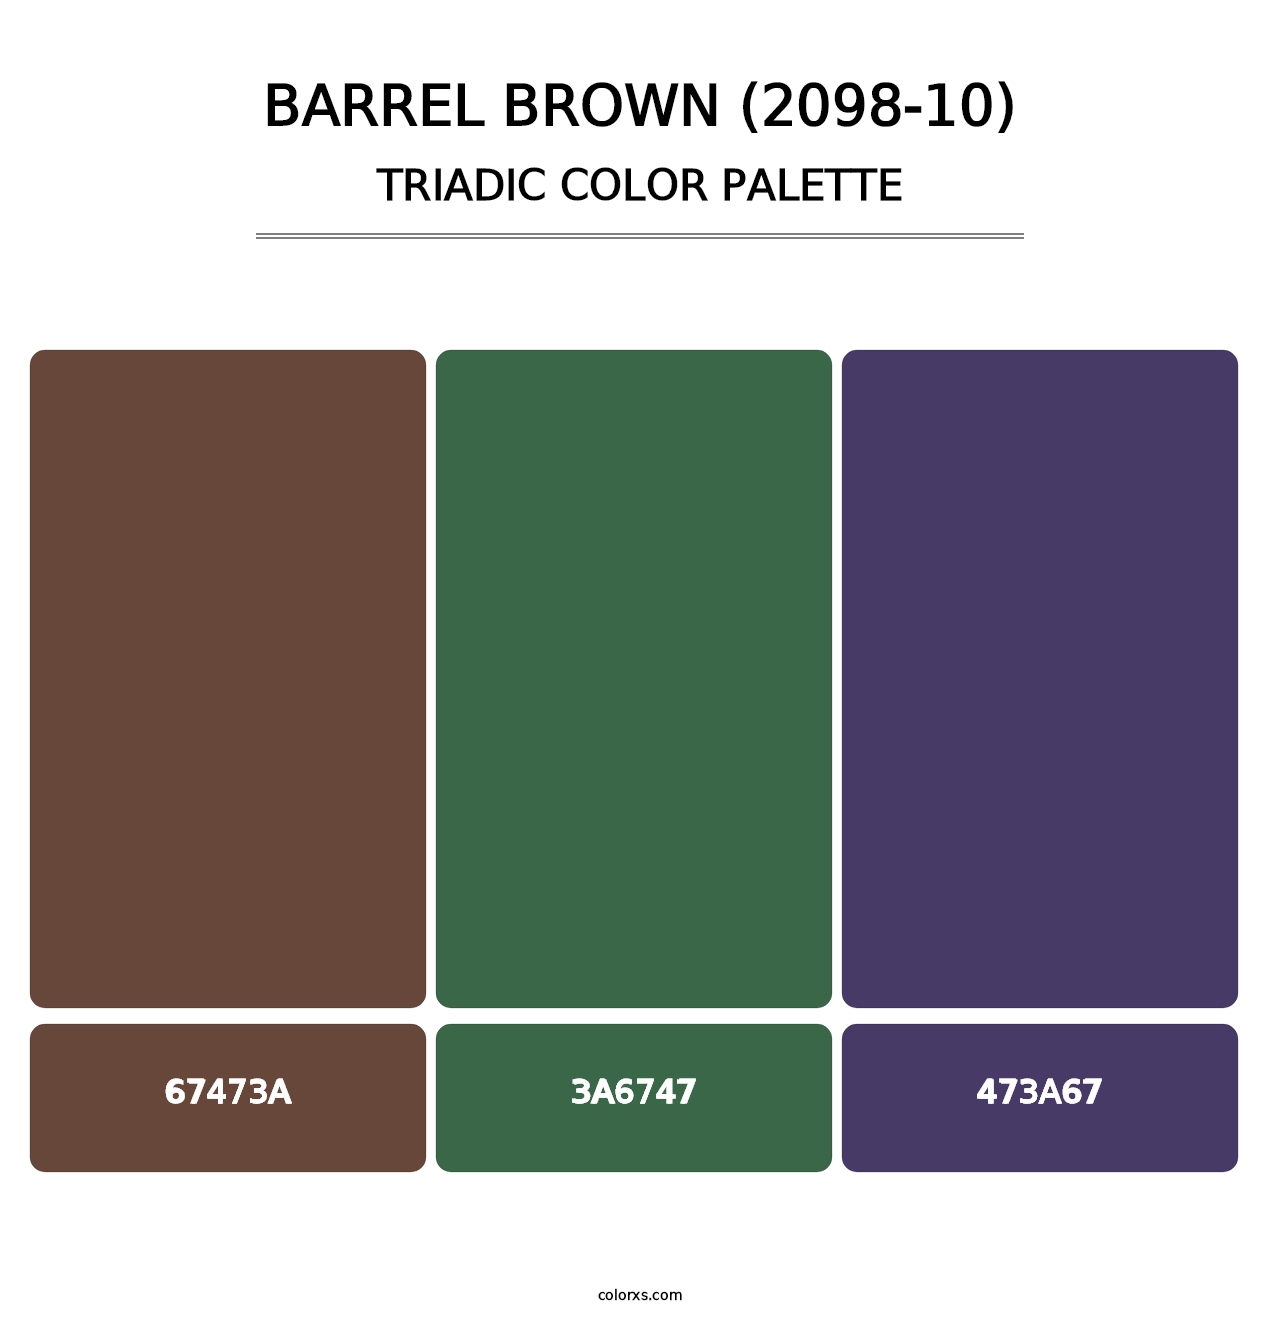 Barrel Brown (2098-10) - Triadic Color Palette